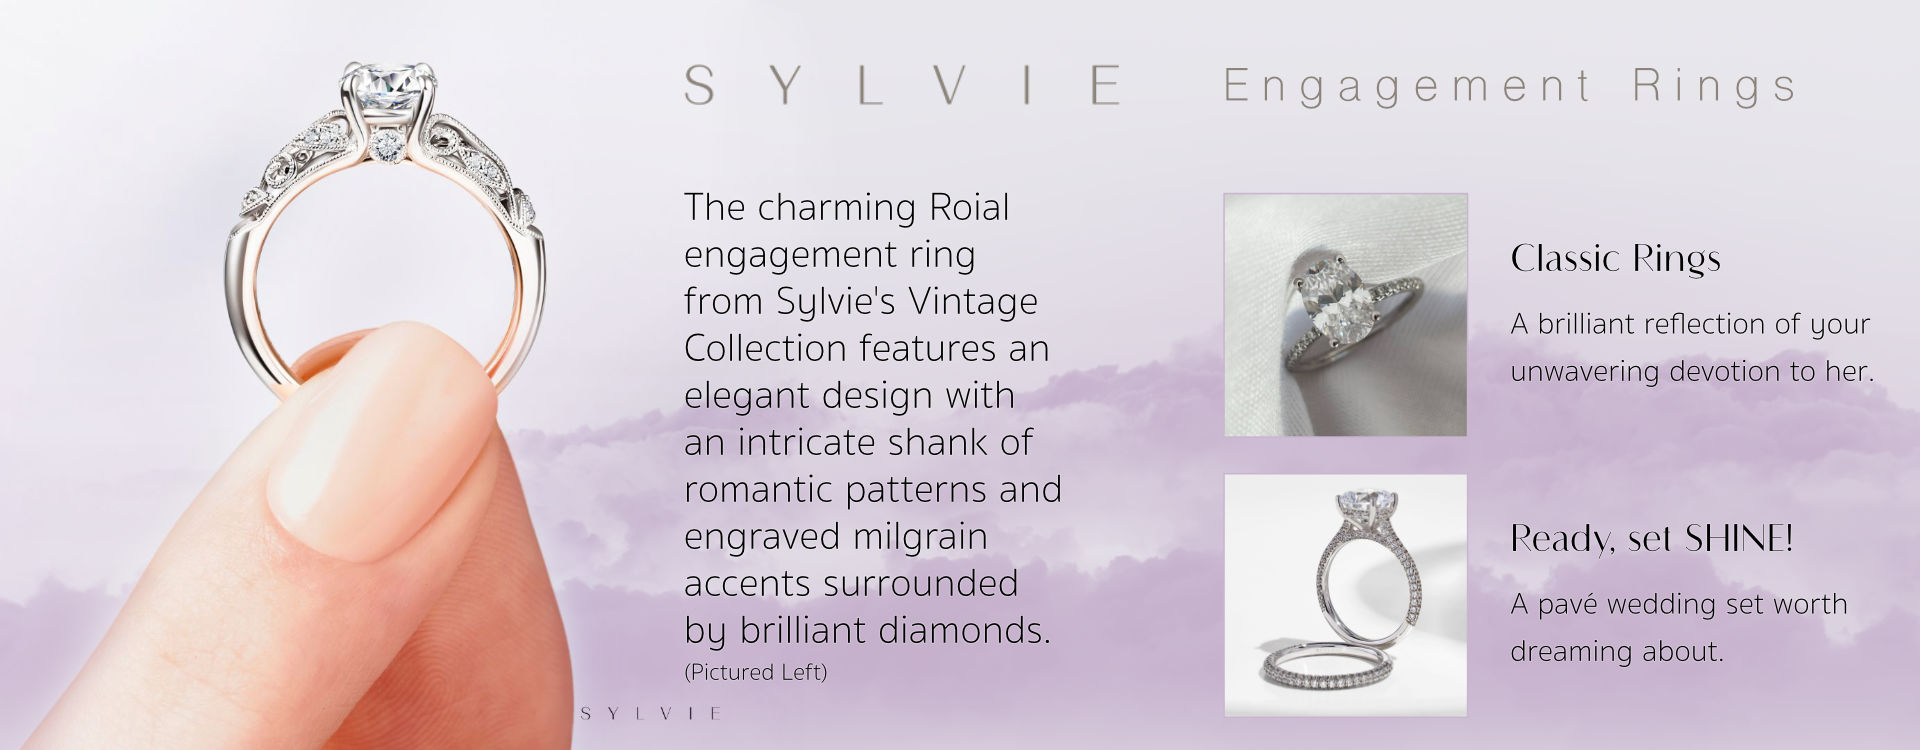 Sylvie Engagement Rings